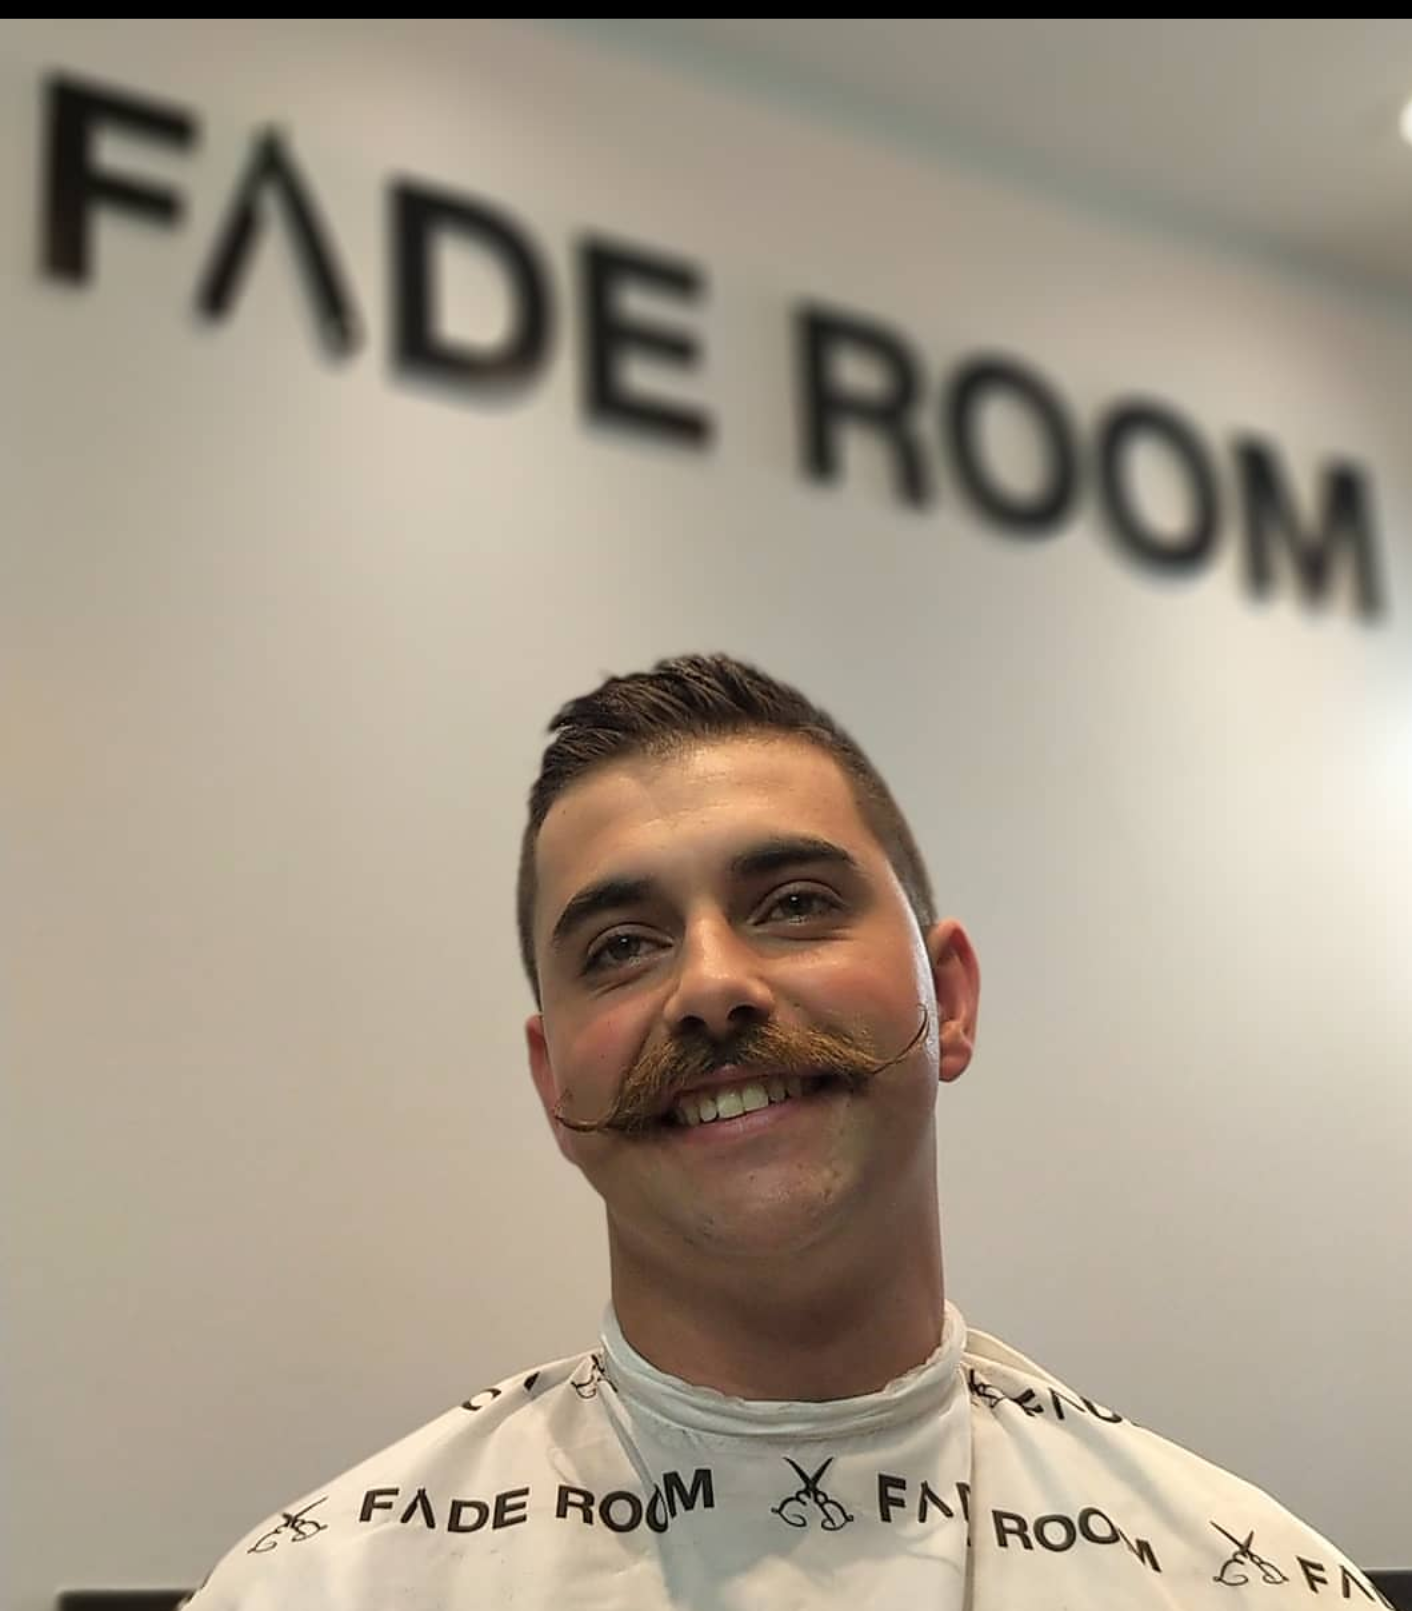 movember mustache, mobro, mens health awareness mustache, fade room barbershop supports fade room